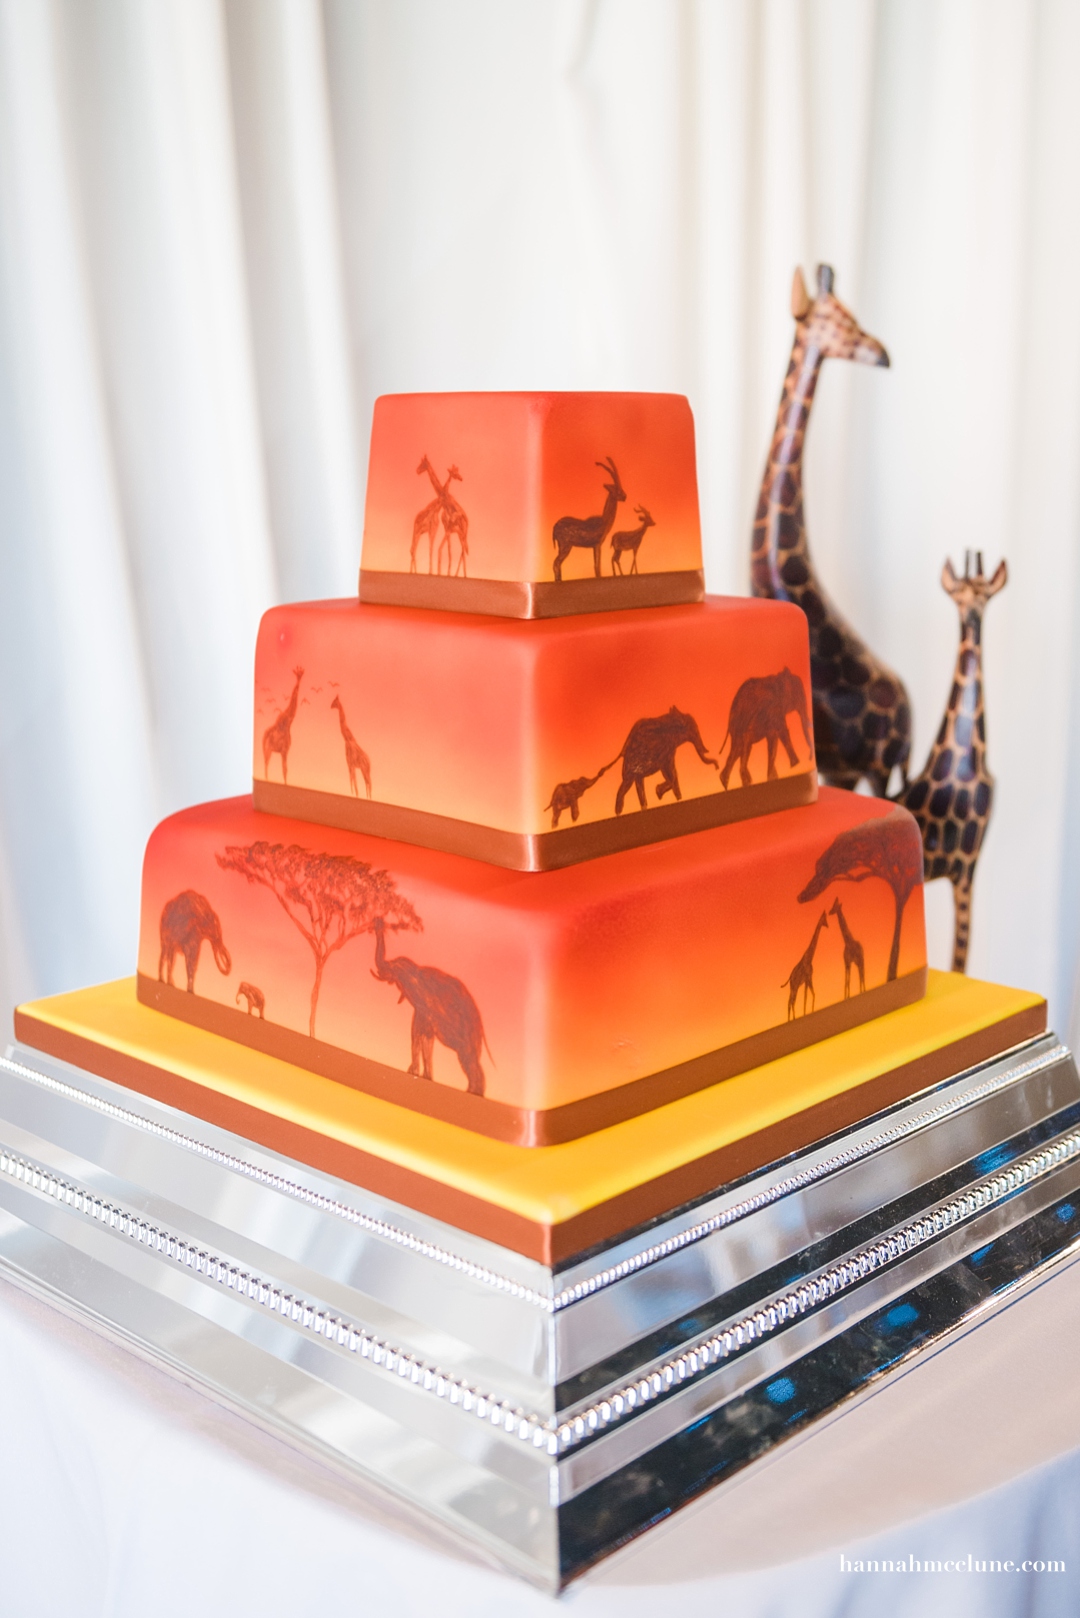 African wedding cake